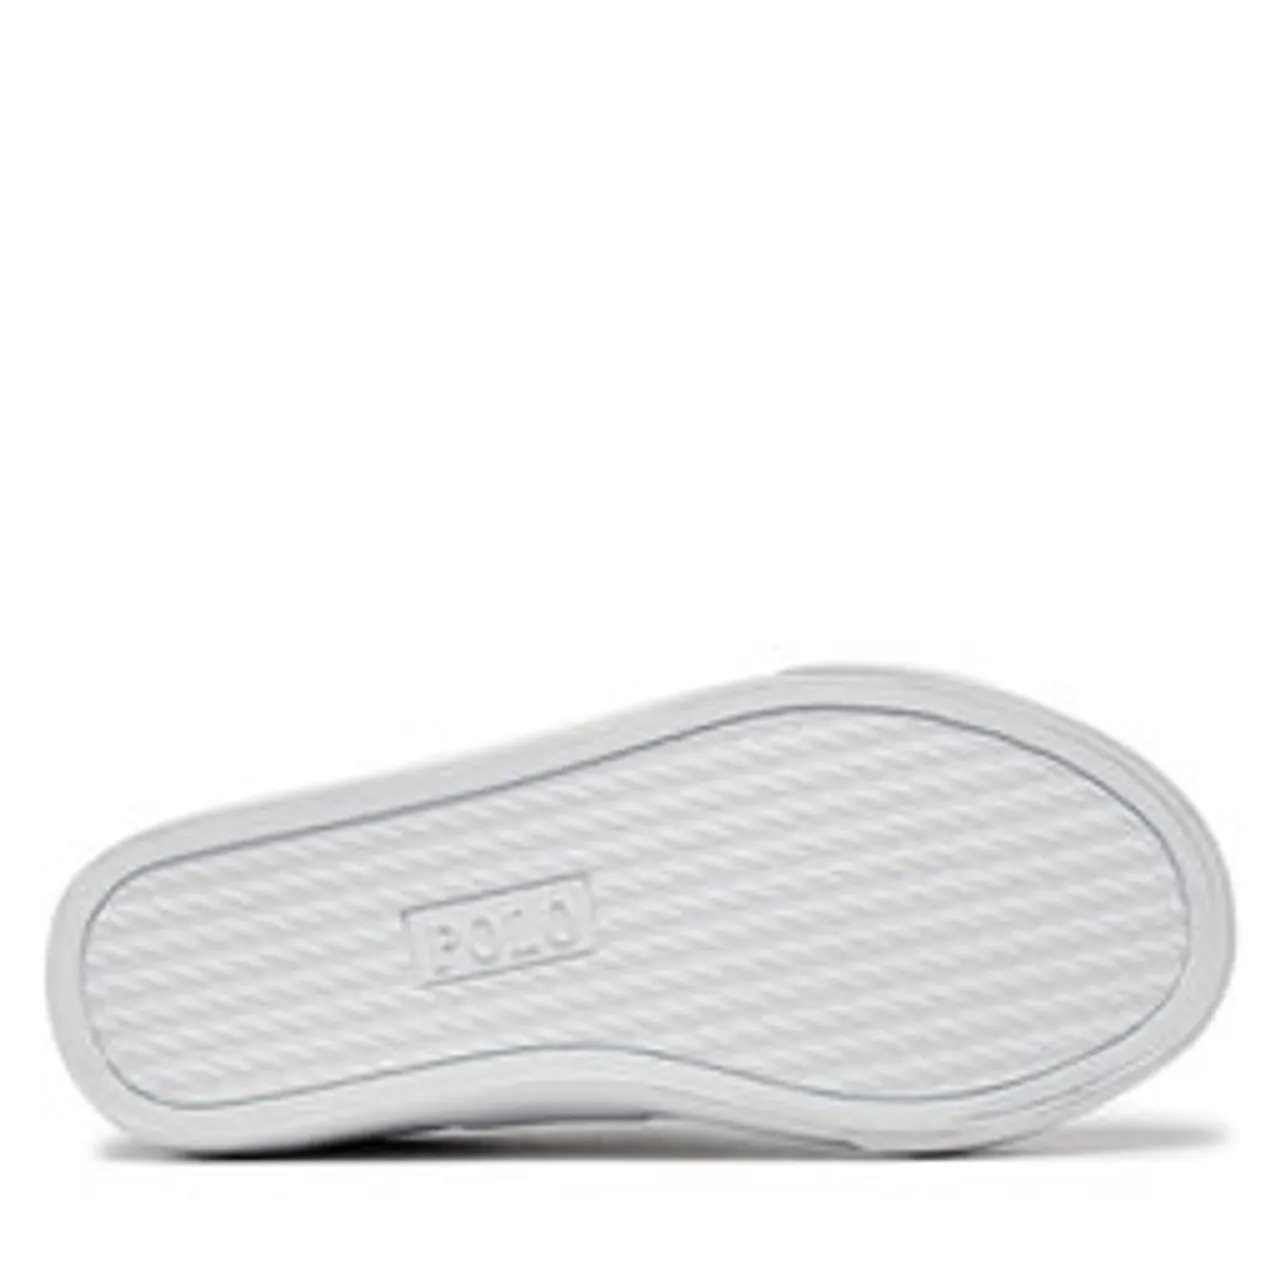 Sneakers Polo Ralph Lauren RL00566410 C Navy Tumbled W/ White Pp